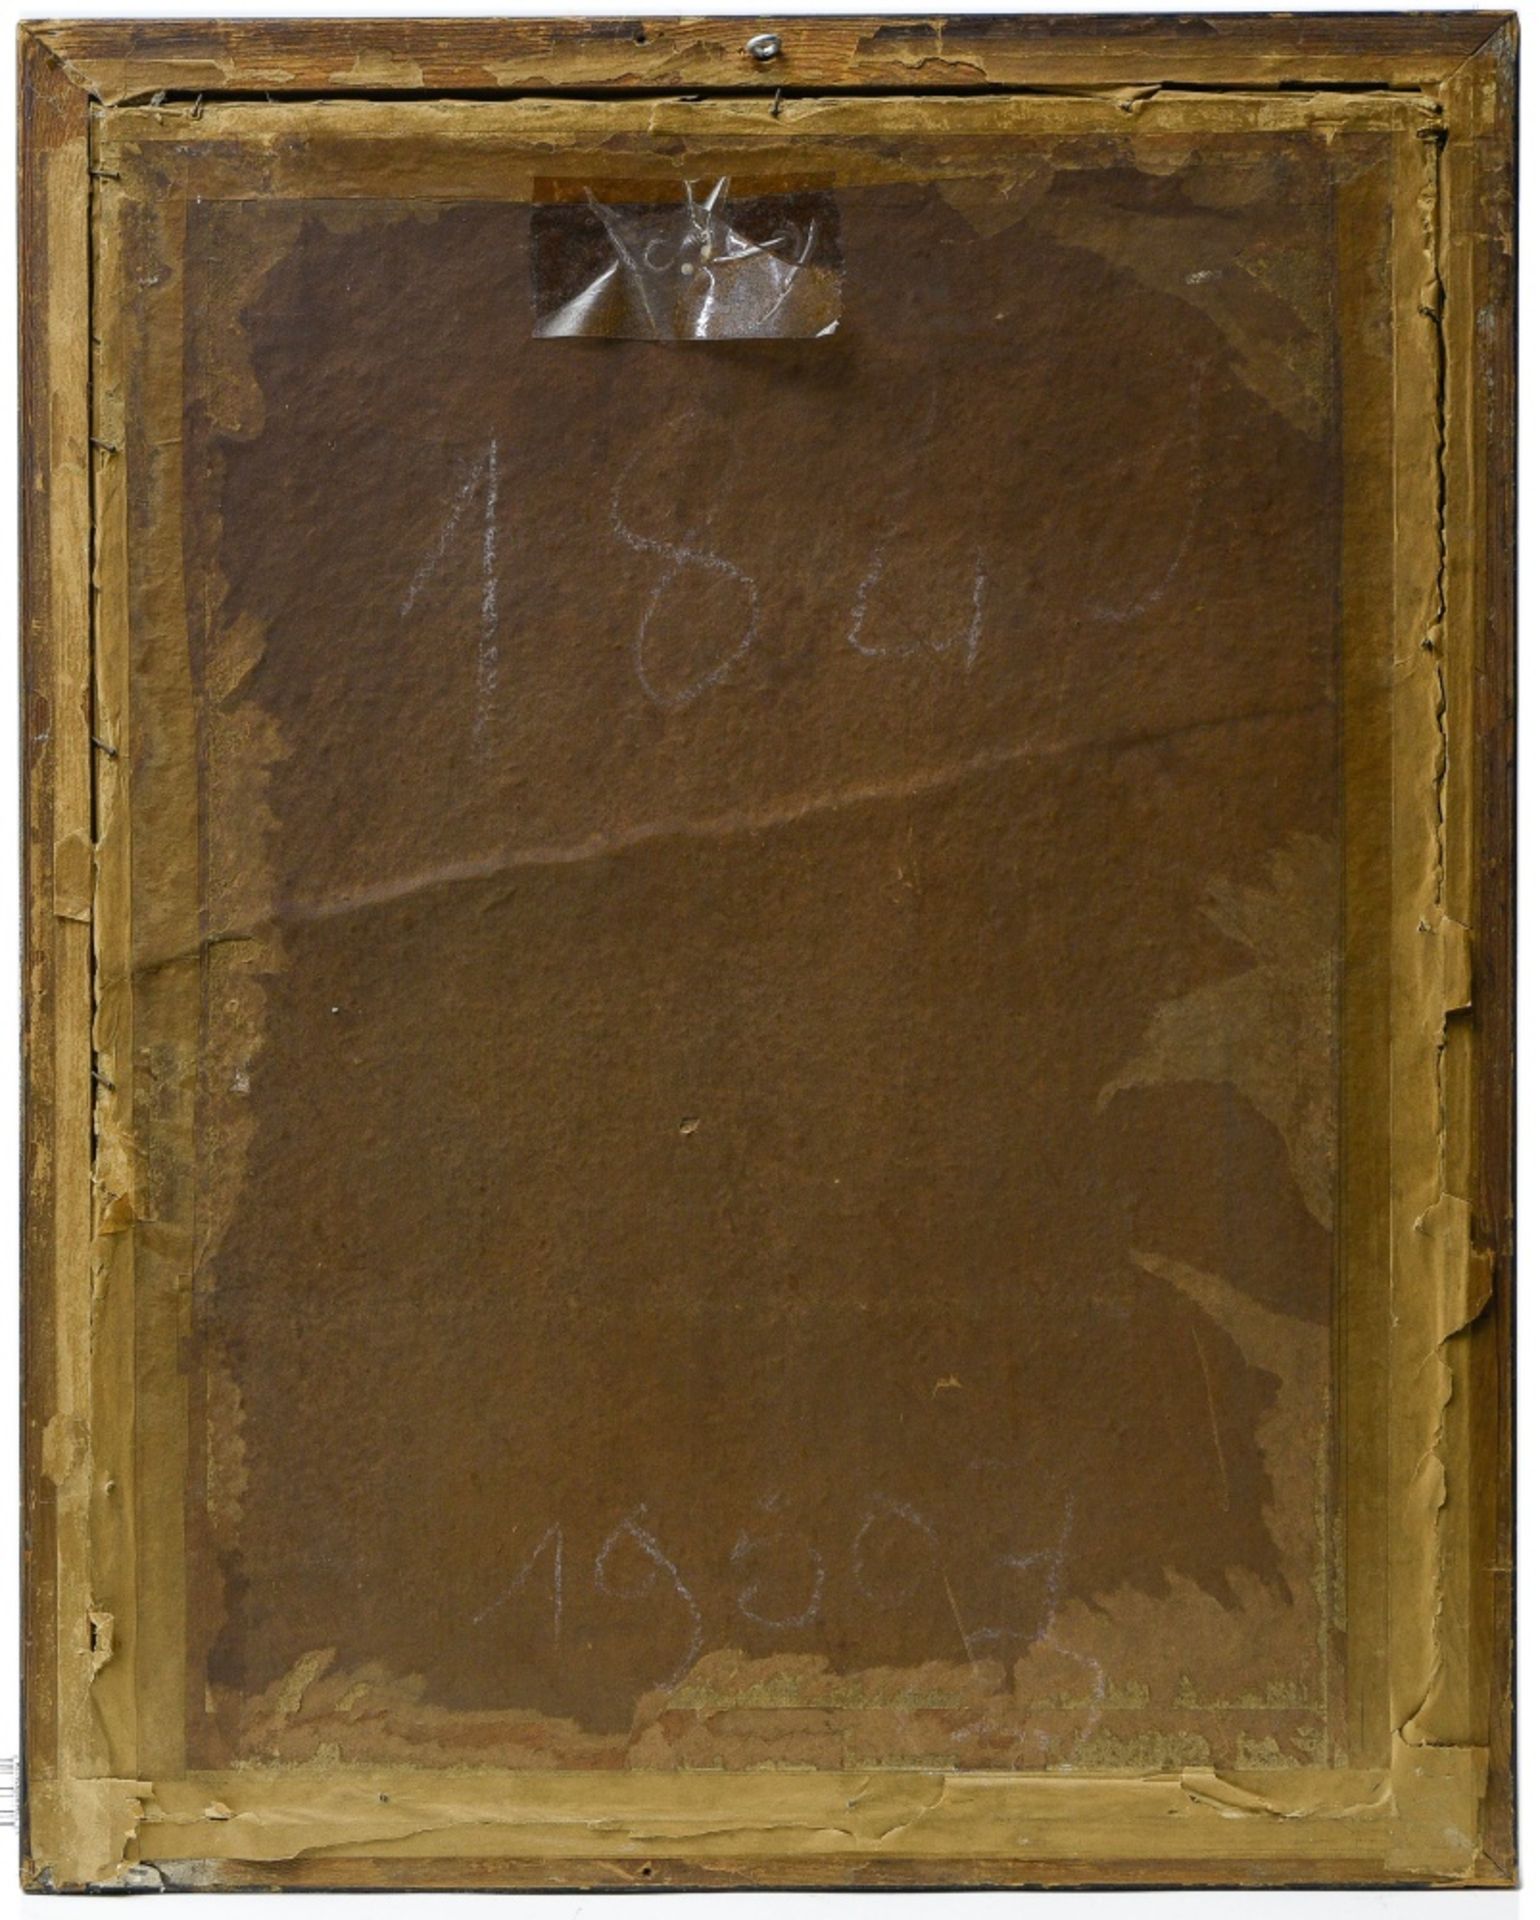 AimŽ DUPONT (1842-1900) Sarah Bernhardt in l'Aiglon, 1900, Print on albumen. Signed A. Dumont N. - Image 3 of 3